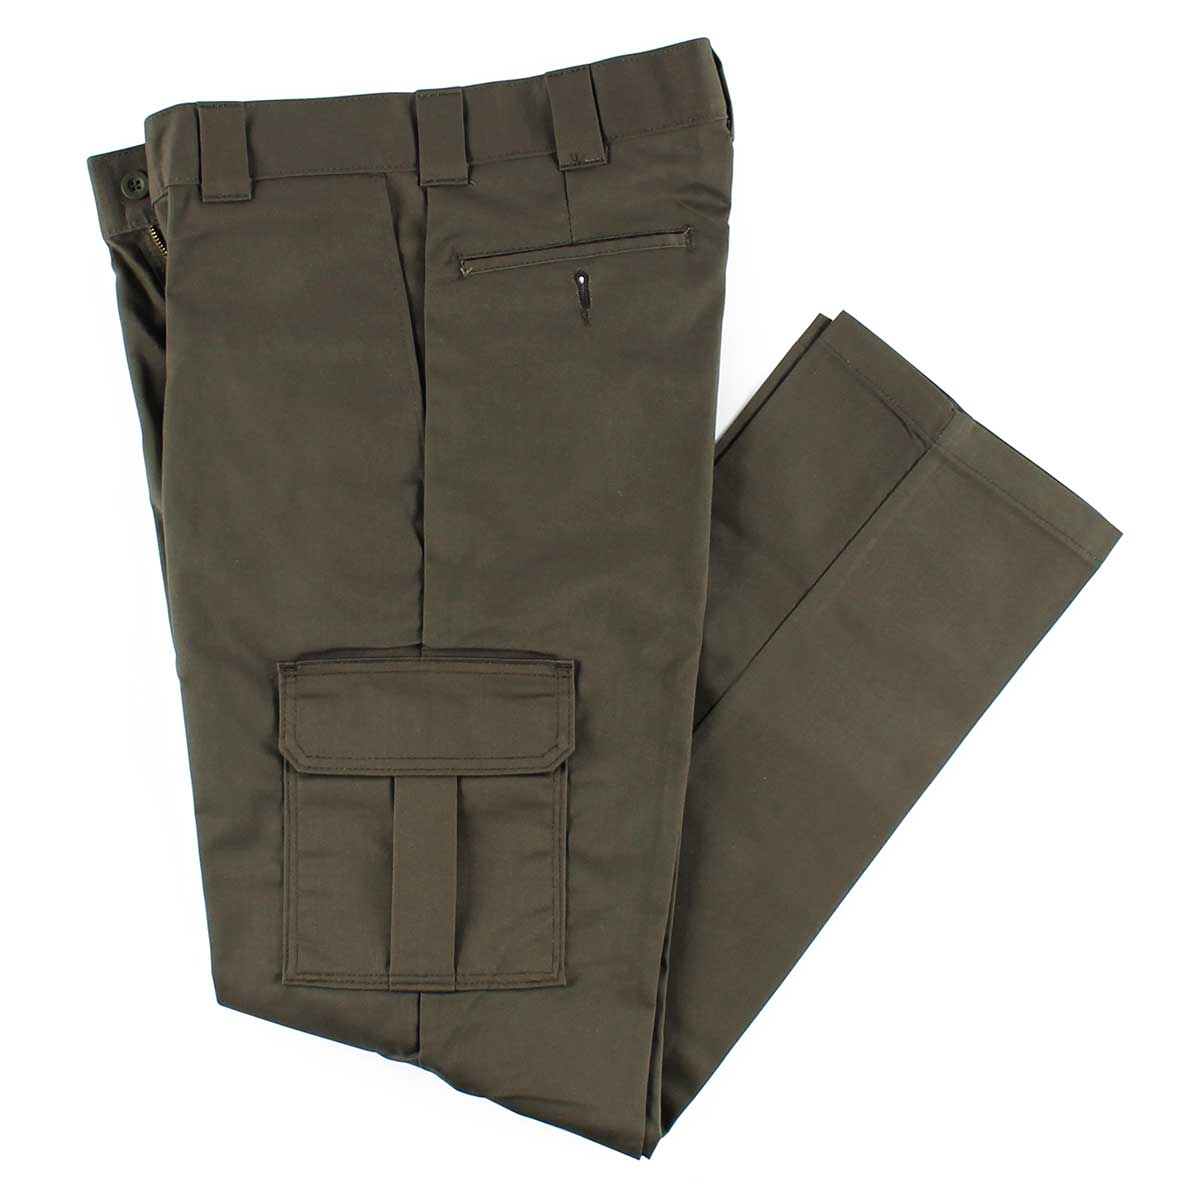 Charcoal Twill Pocket Wide Leg Cargo Pants